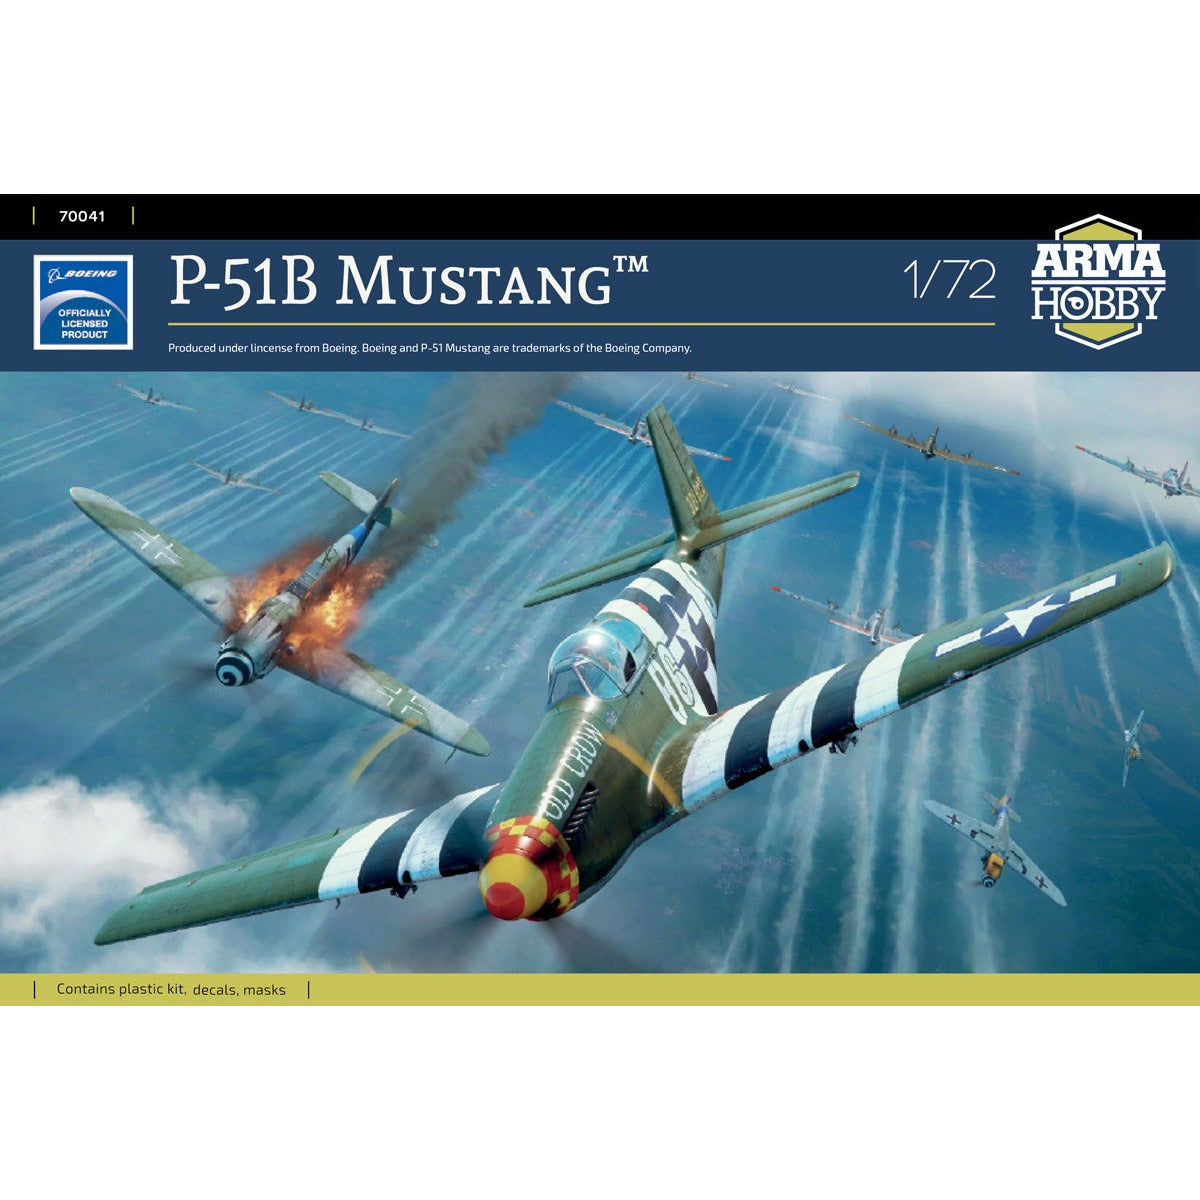 P-51B Mustang 1/72 by Arma Hobby